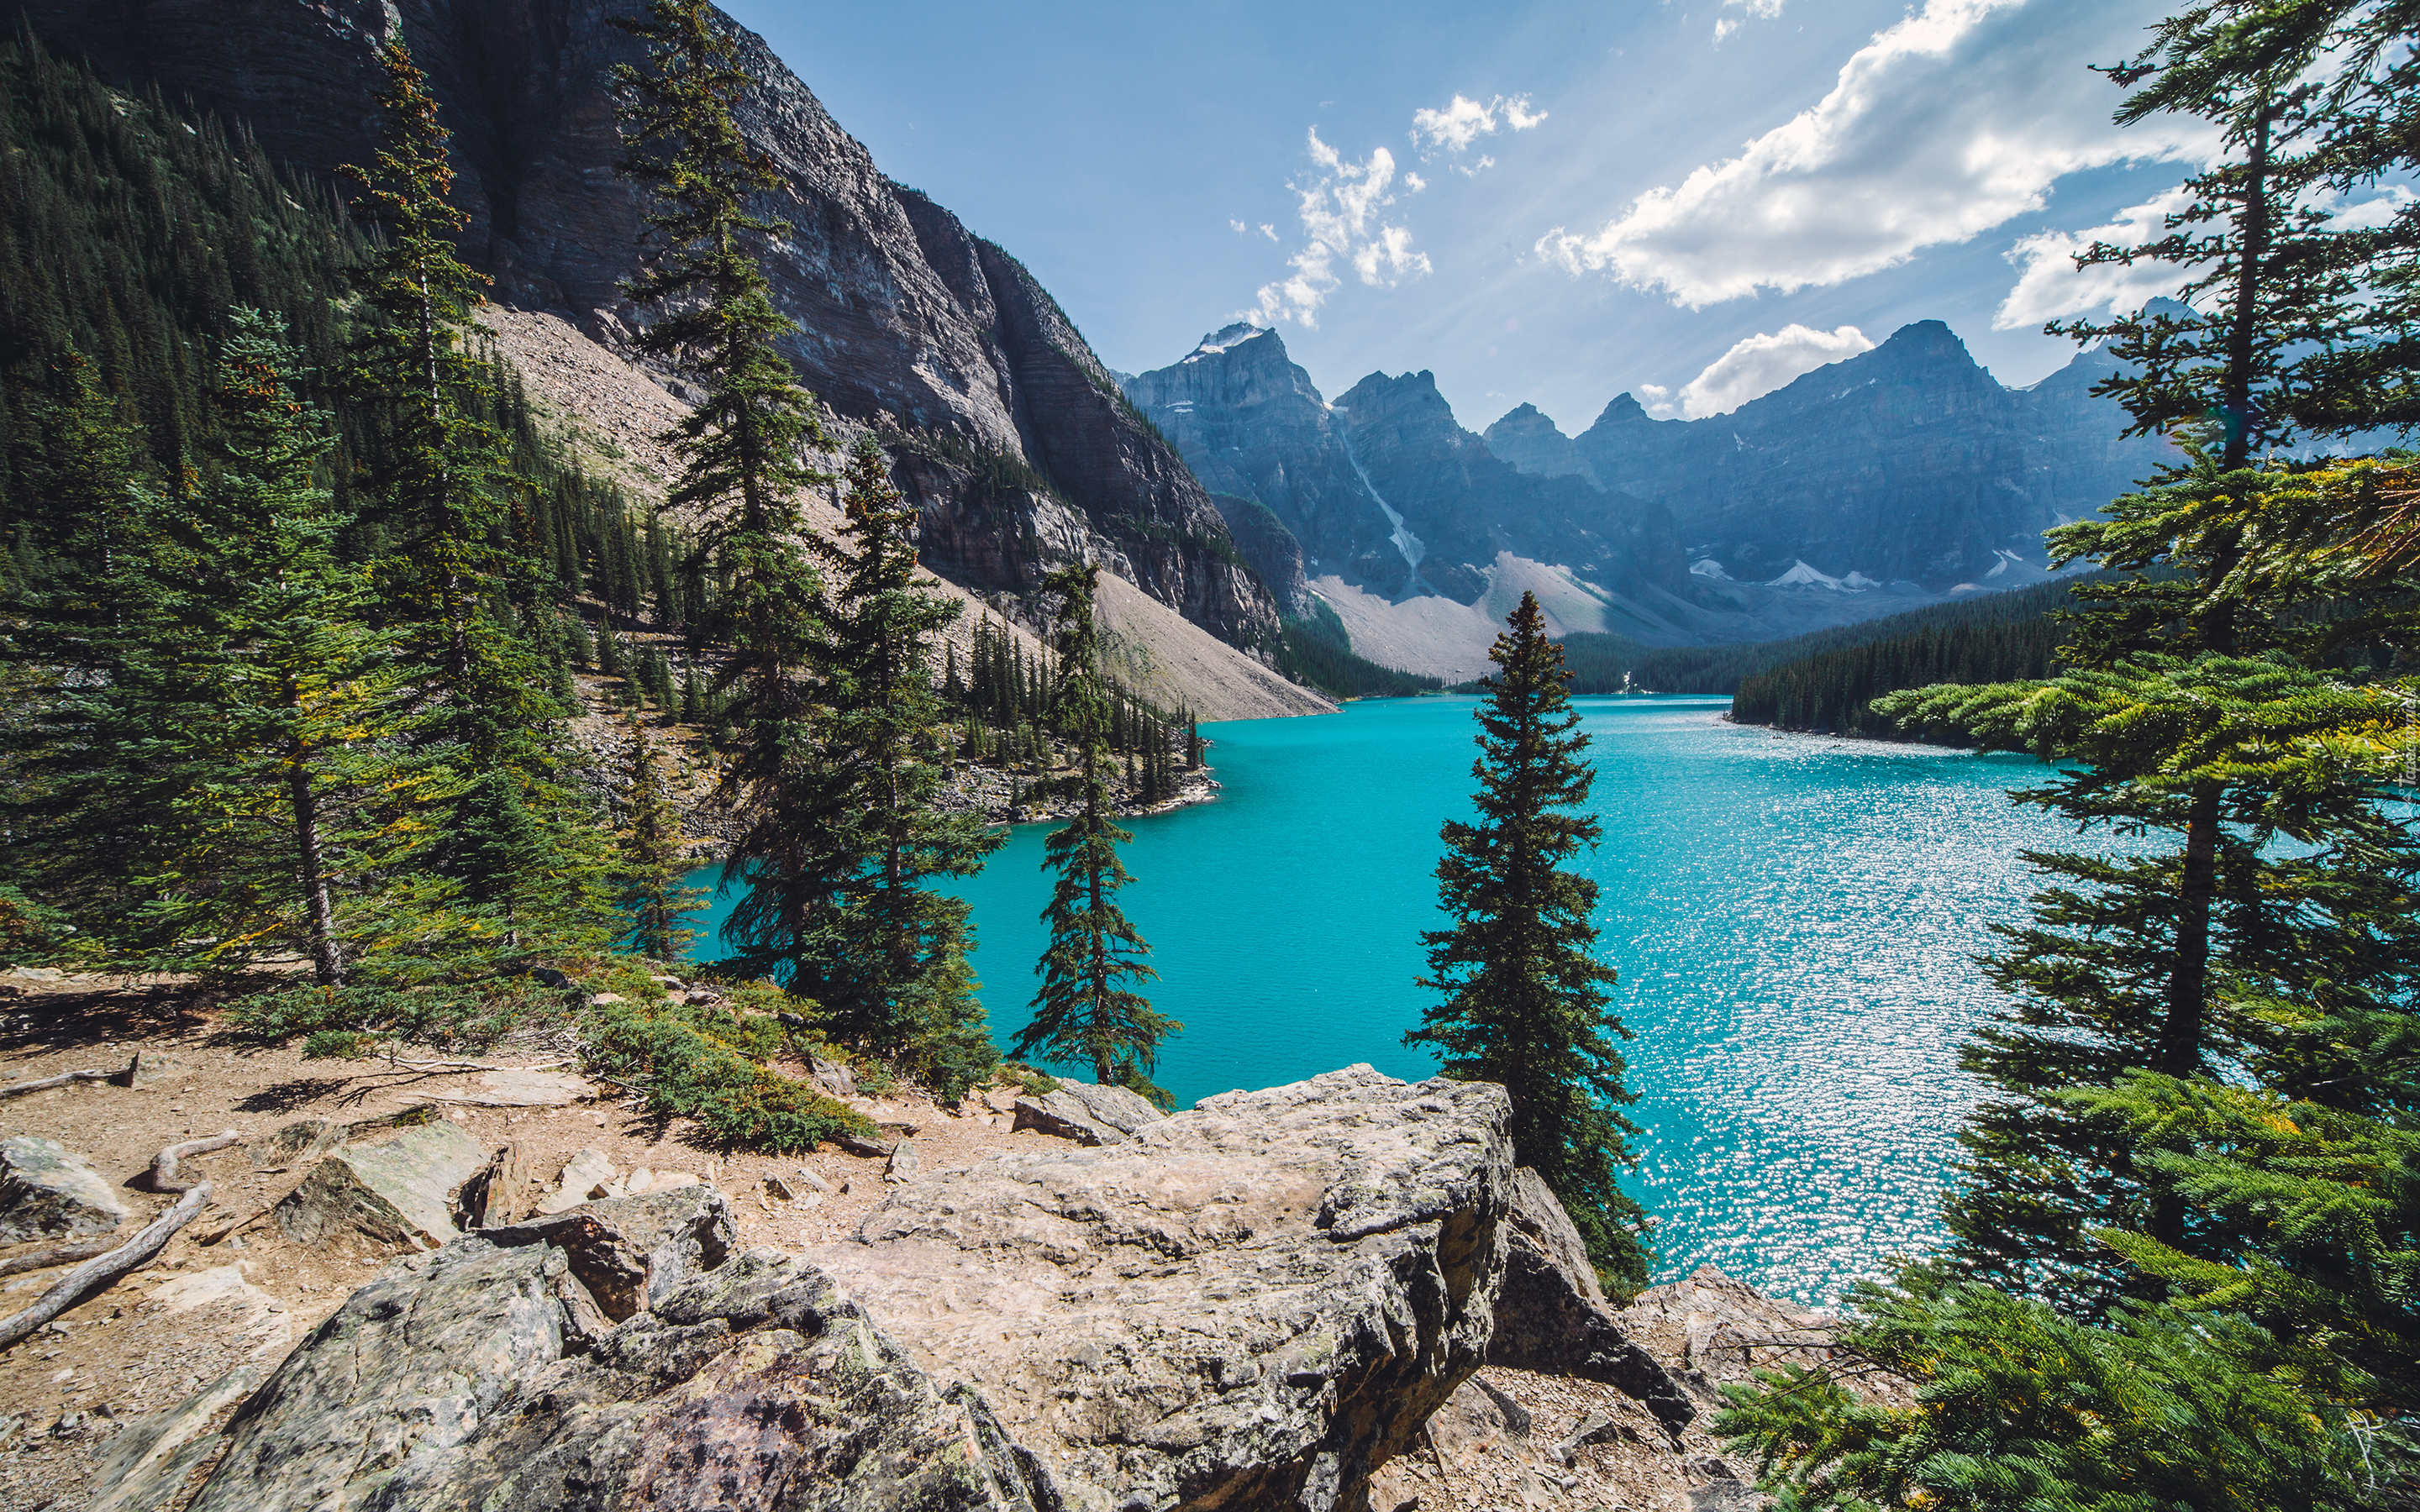 Kanada, Park Narodowy Banff, Góry, Las, Jezioro Moraine Lake